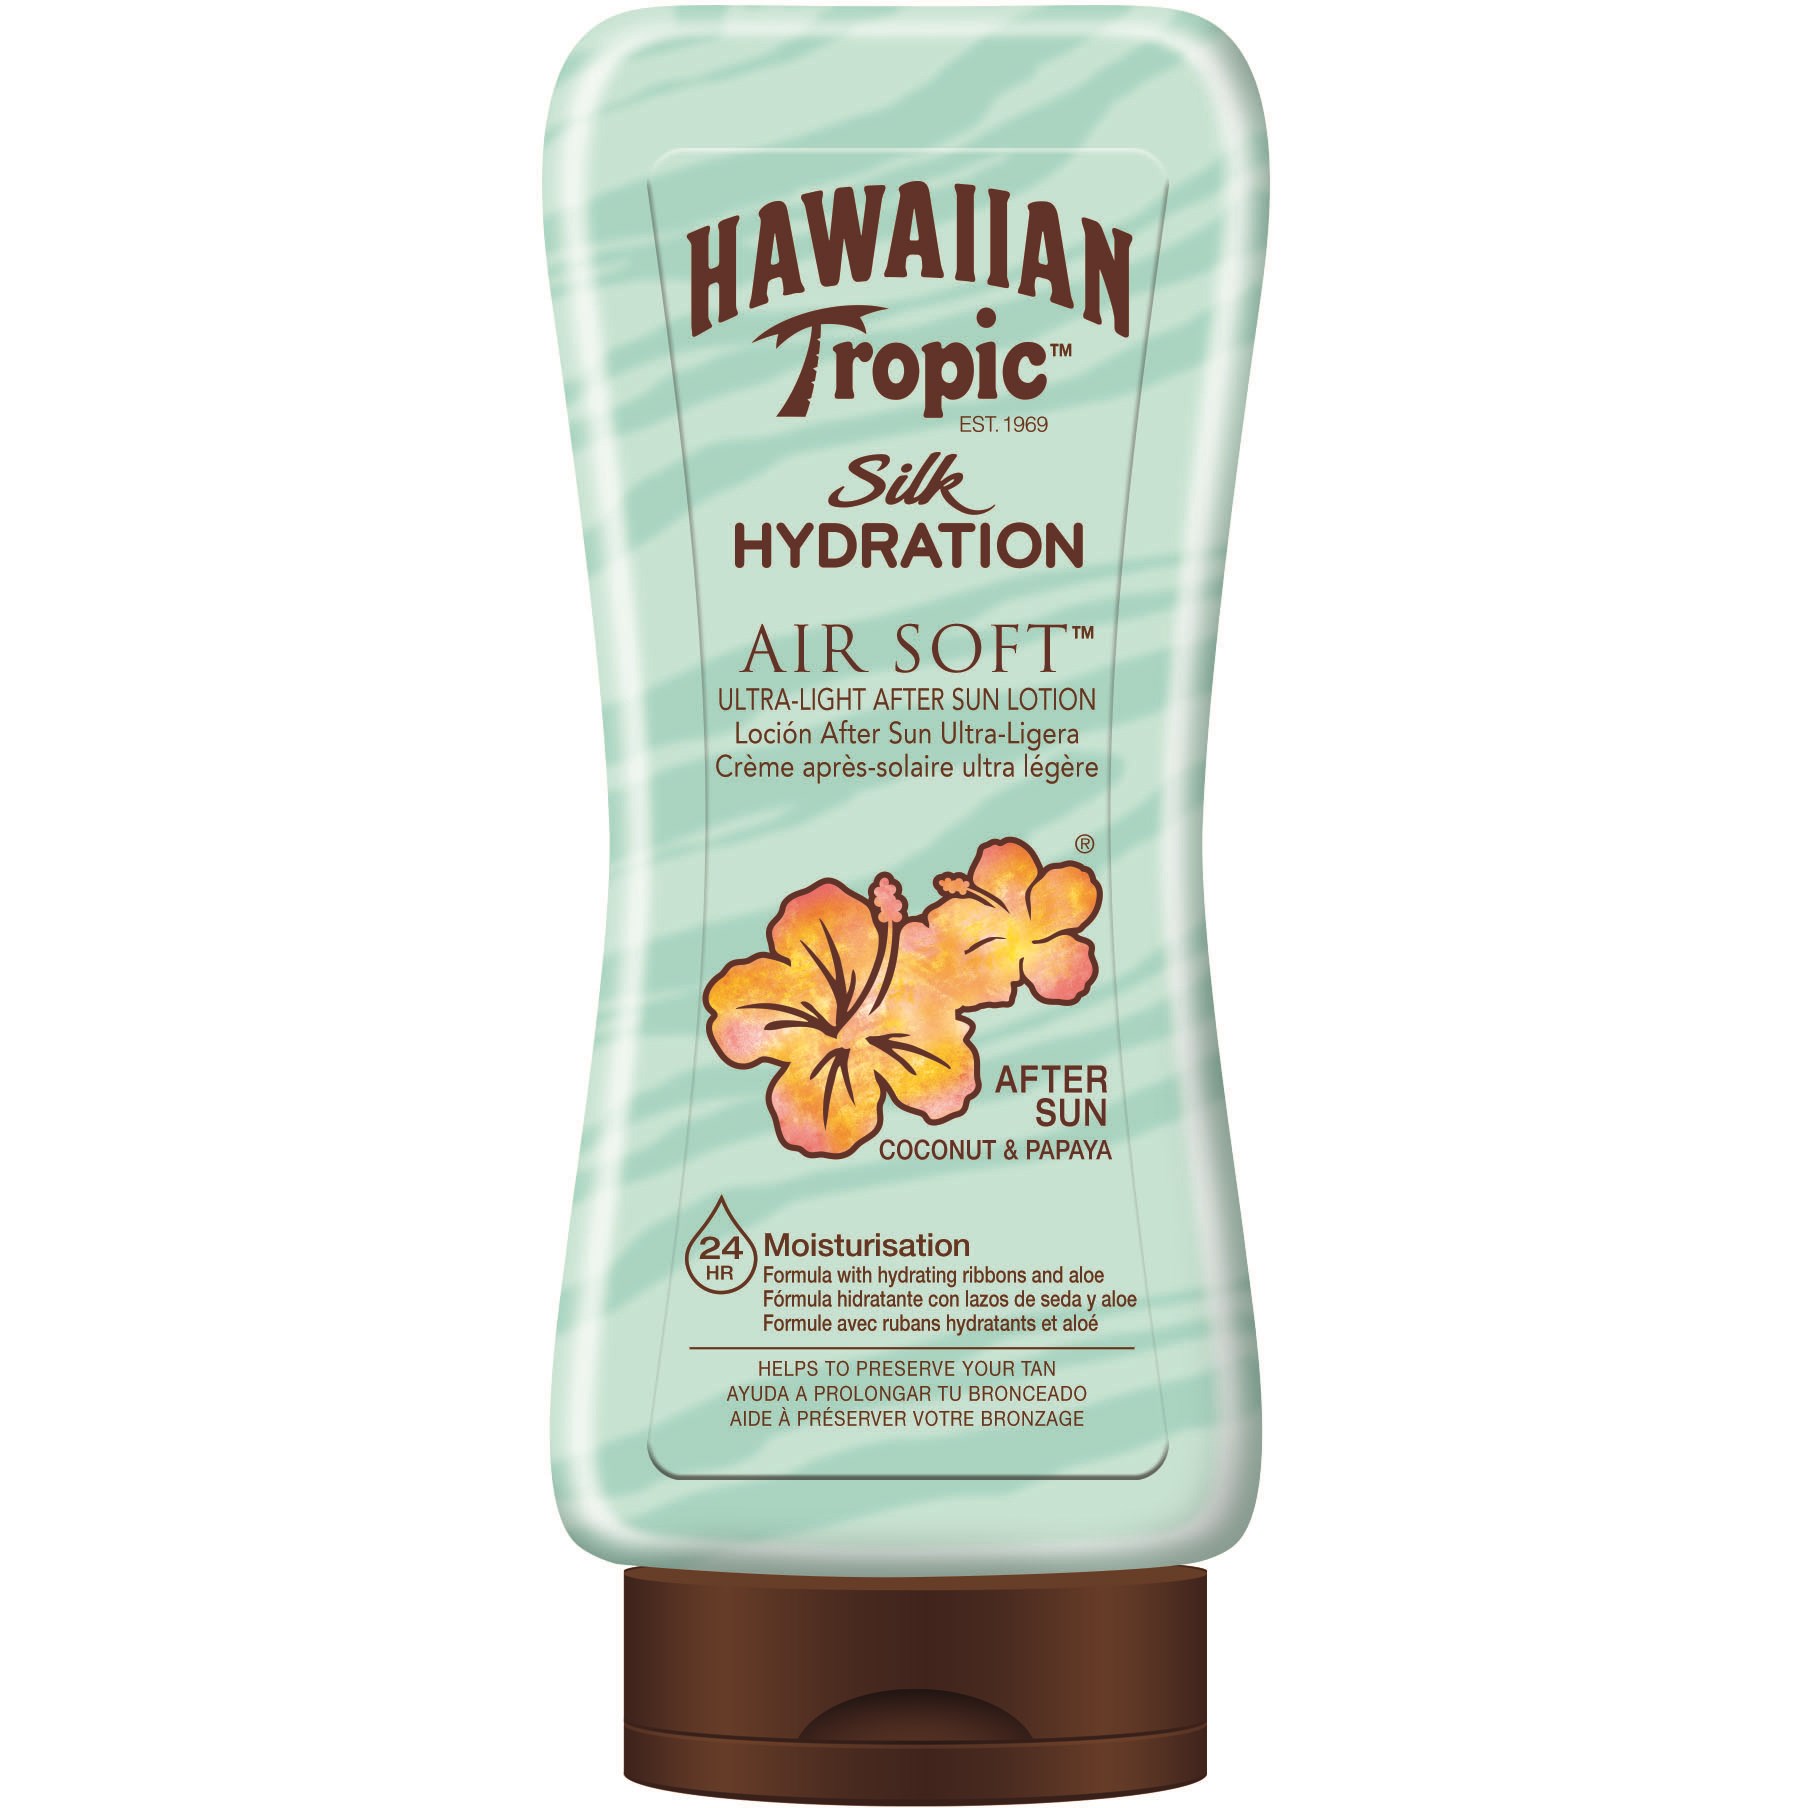 Bilde av Hawaiian Tropic Silk Hydration Air Soft Ultra-light After Sun Lotion 1